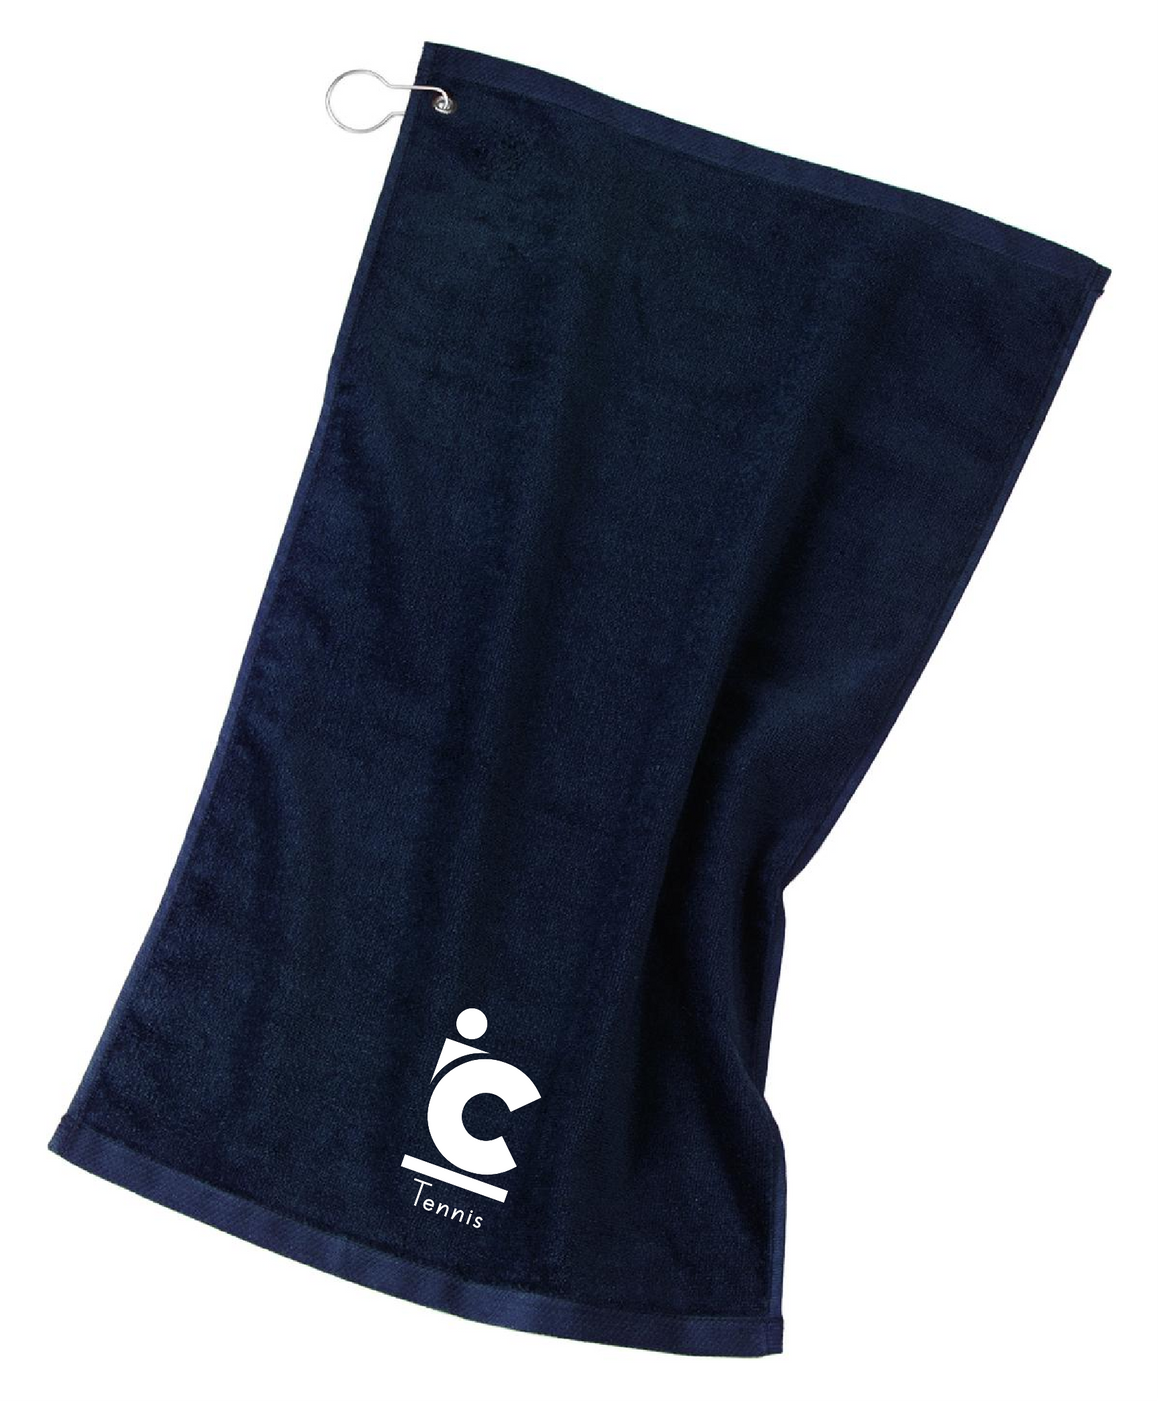 IC Tennis Sports Towel